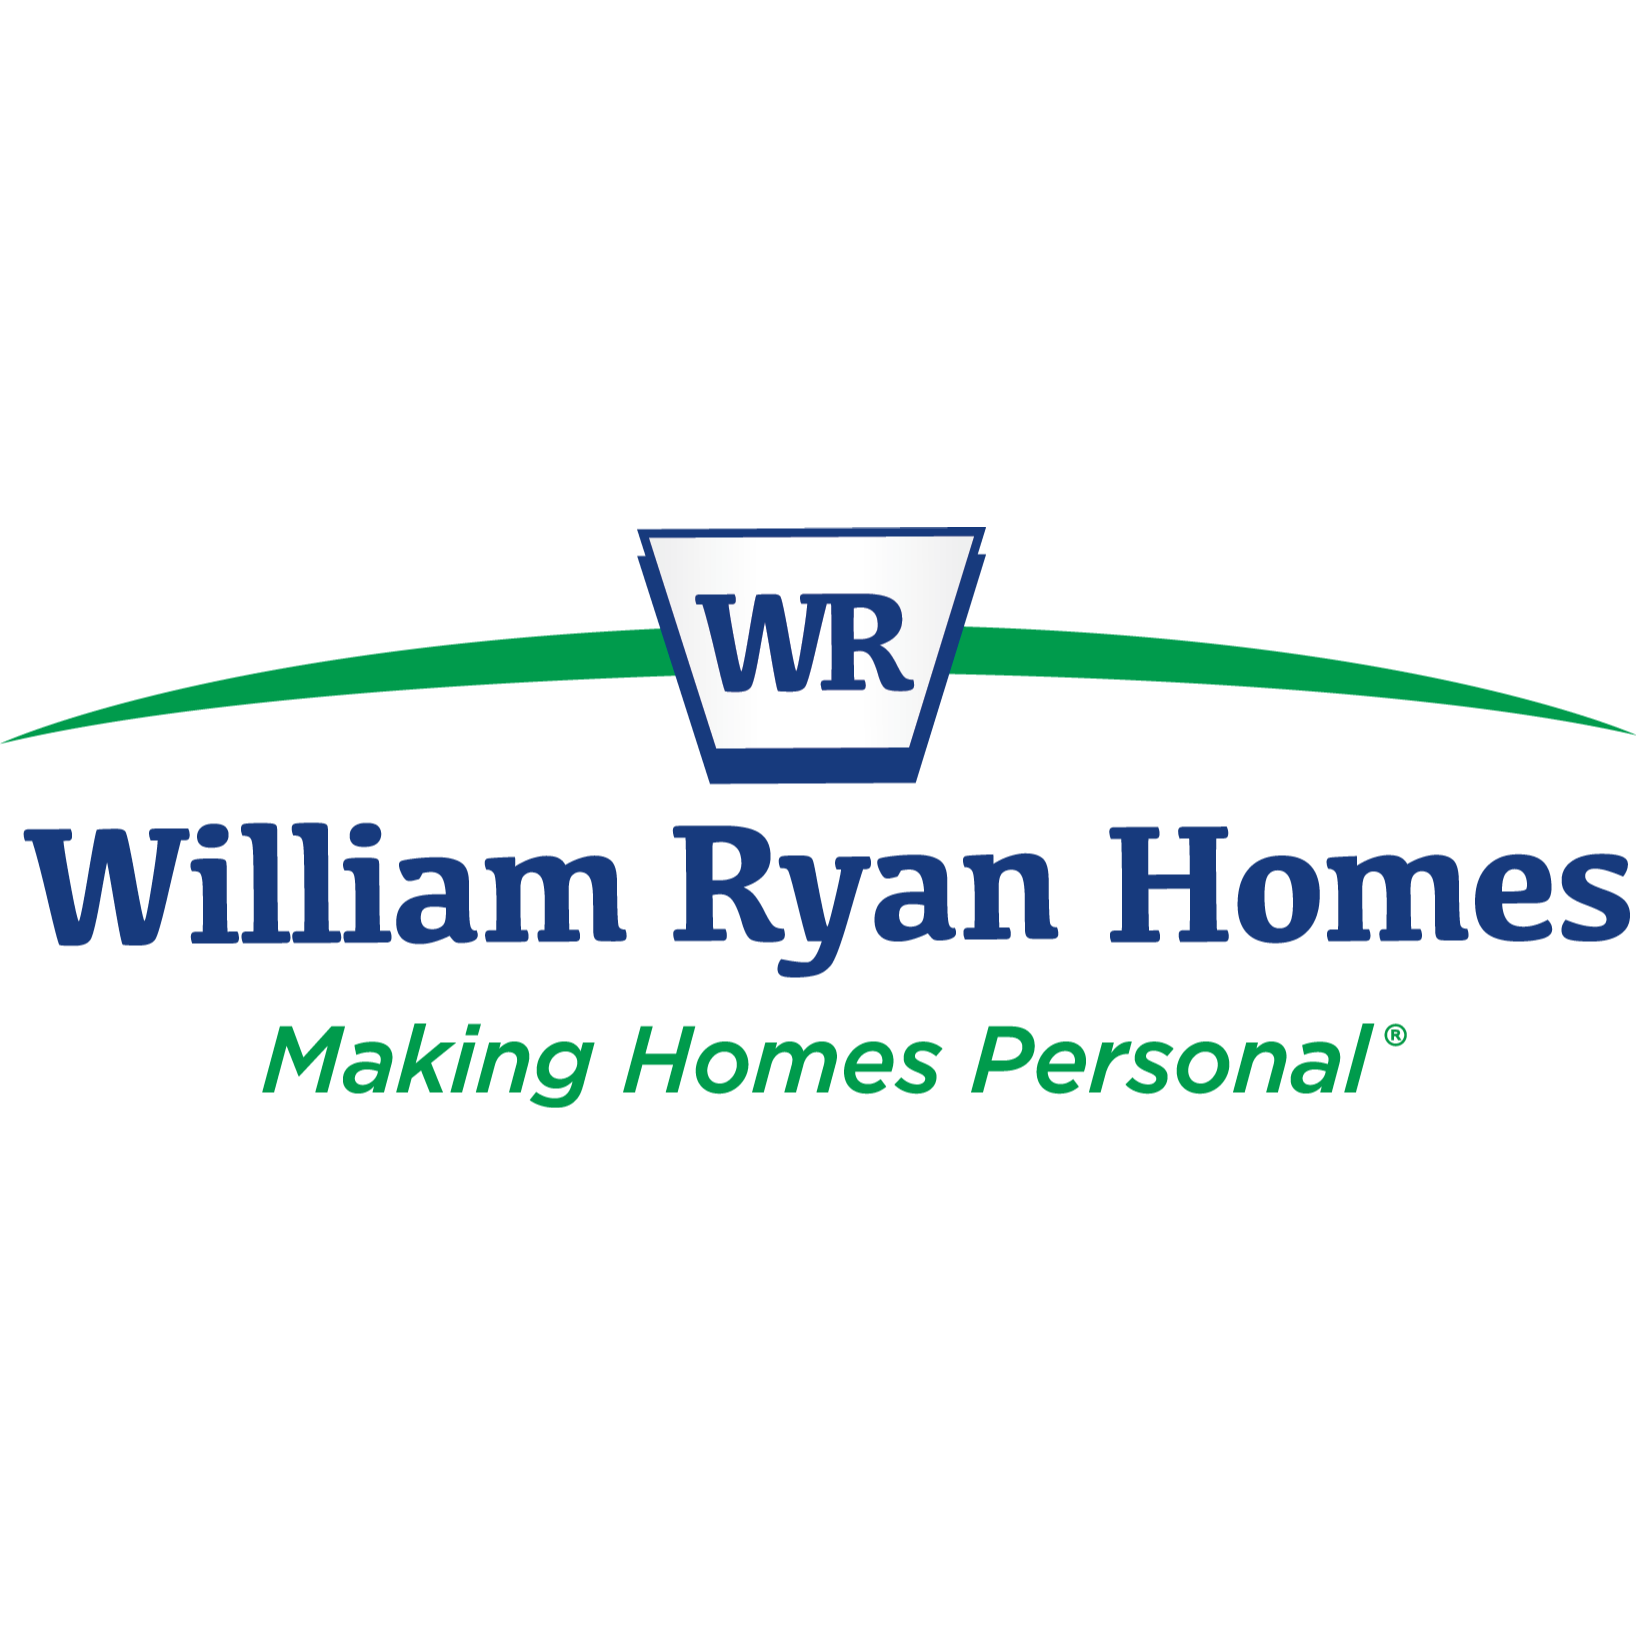 William Ryan Homes at Devonshire